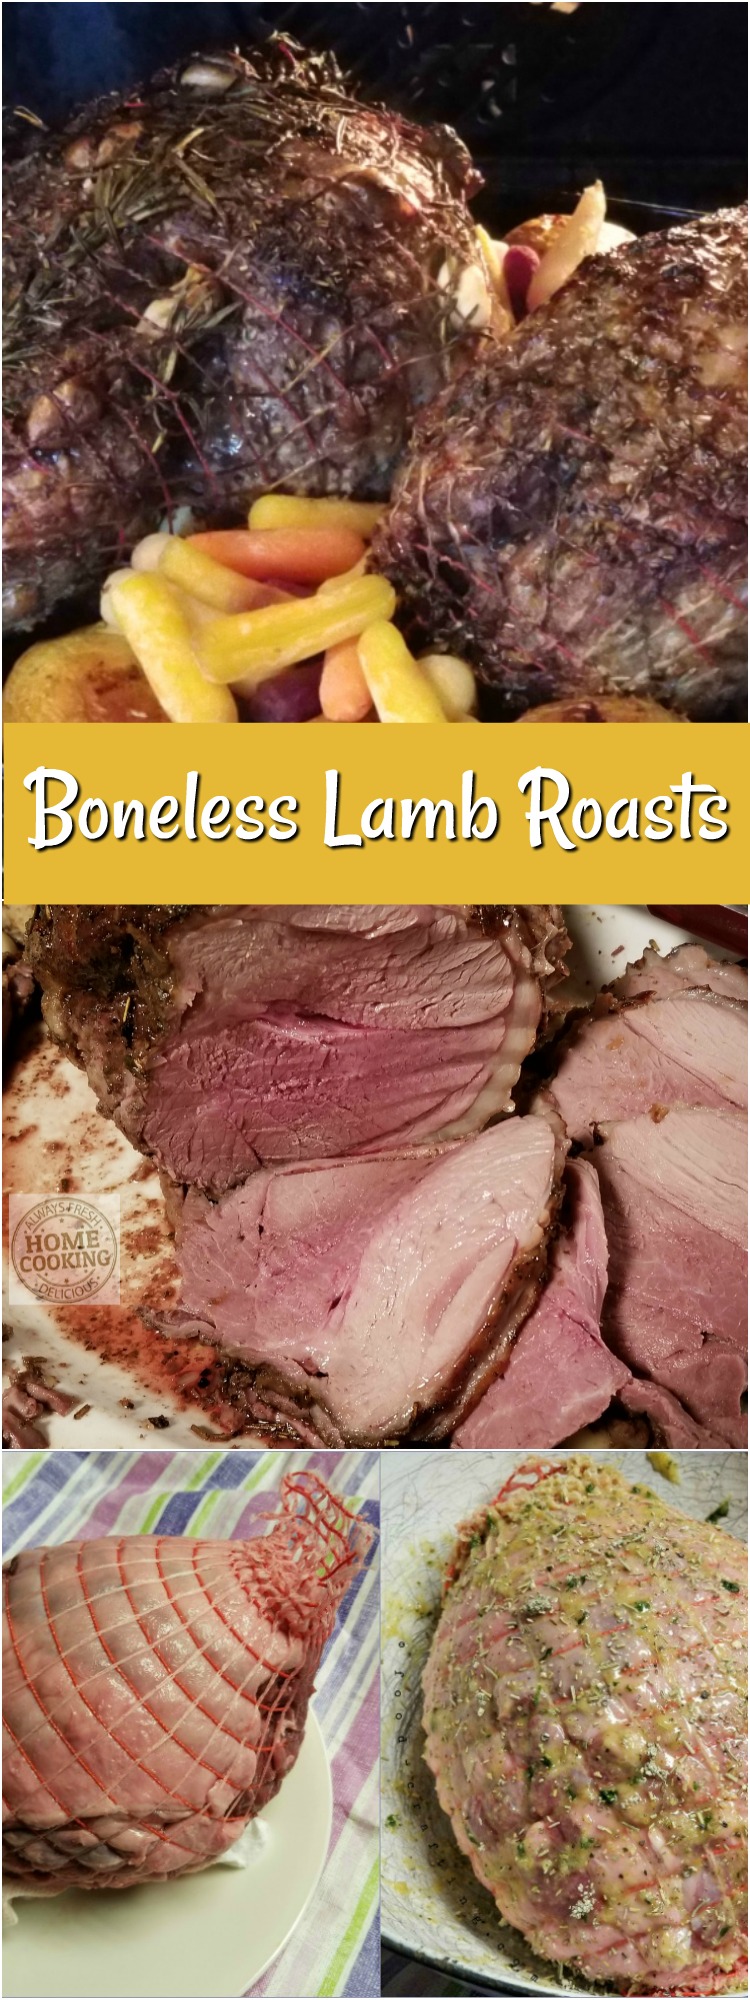 Leg of lamb cuts can be used in so many recipes. Pictured are whole boneless leg of lamb and boneless leg of lamb roast.